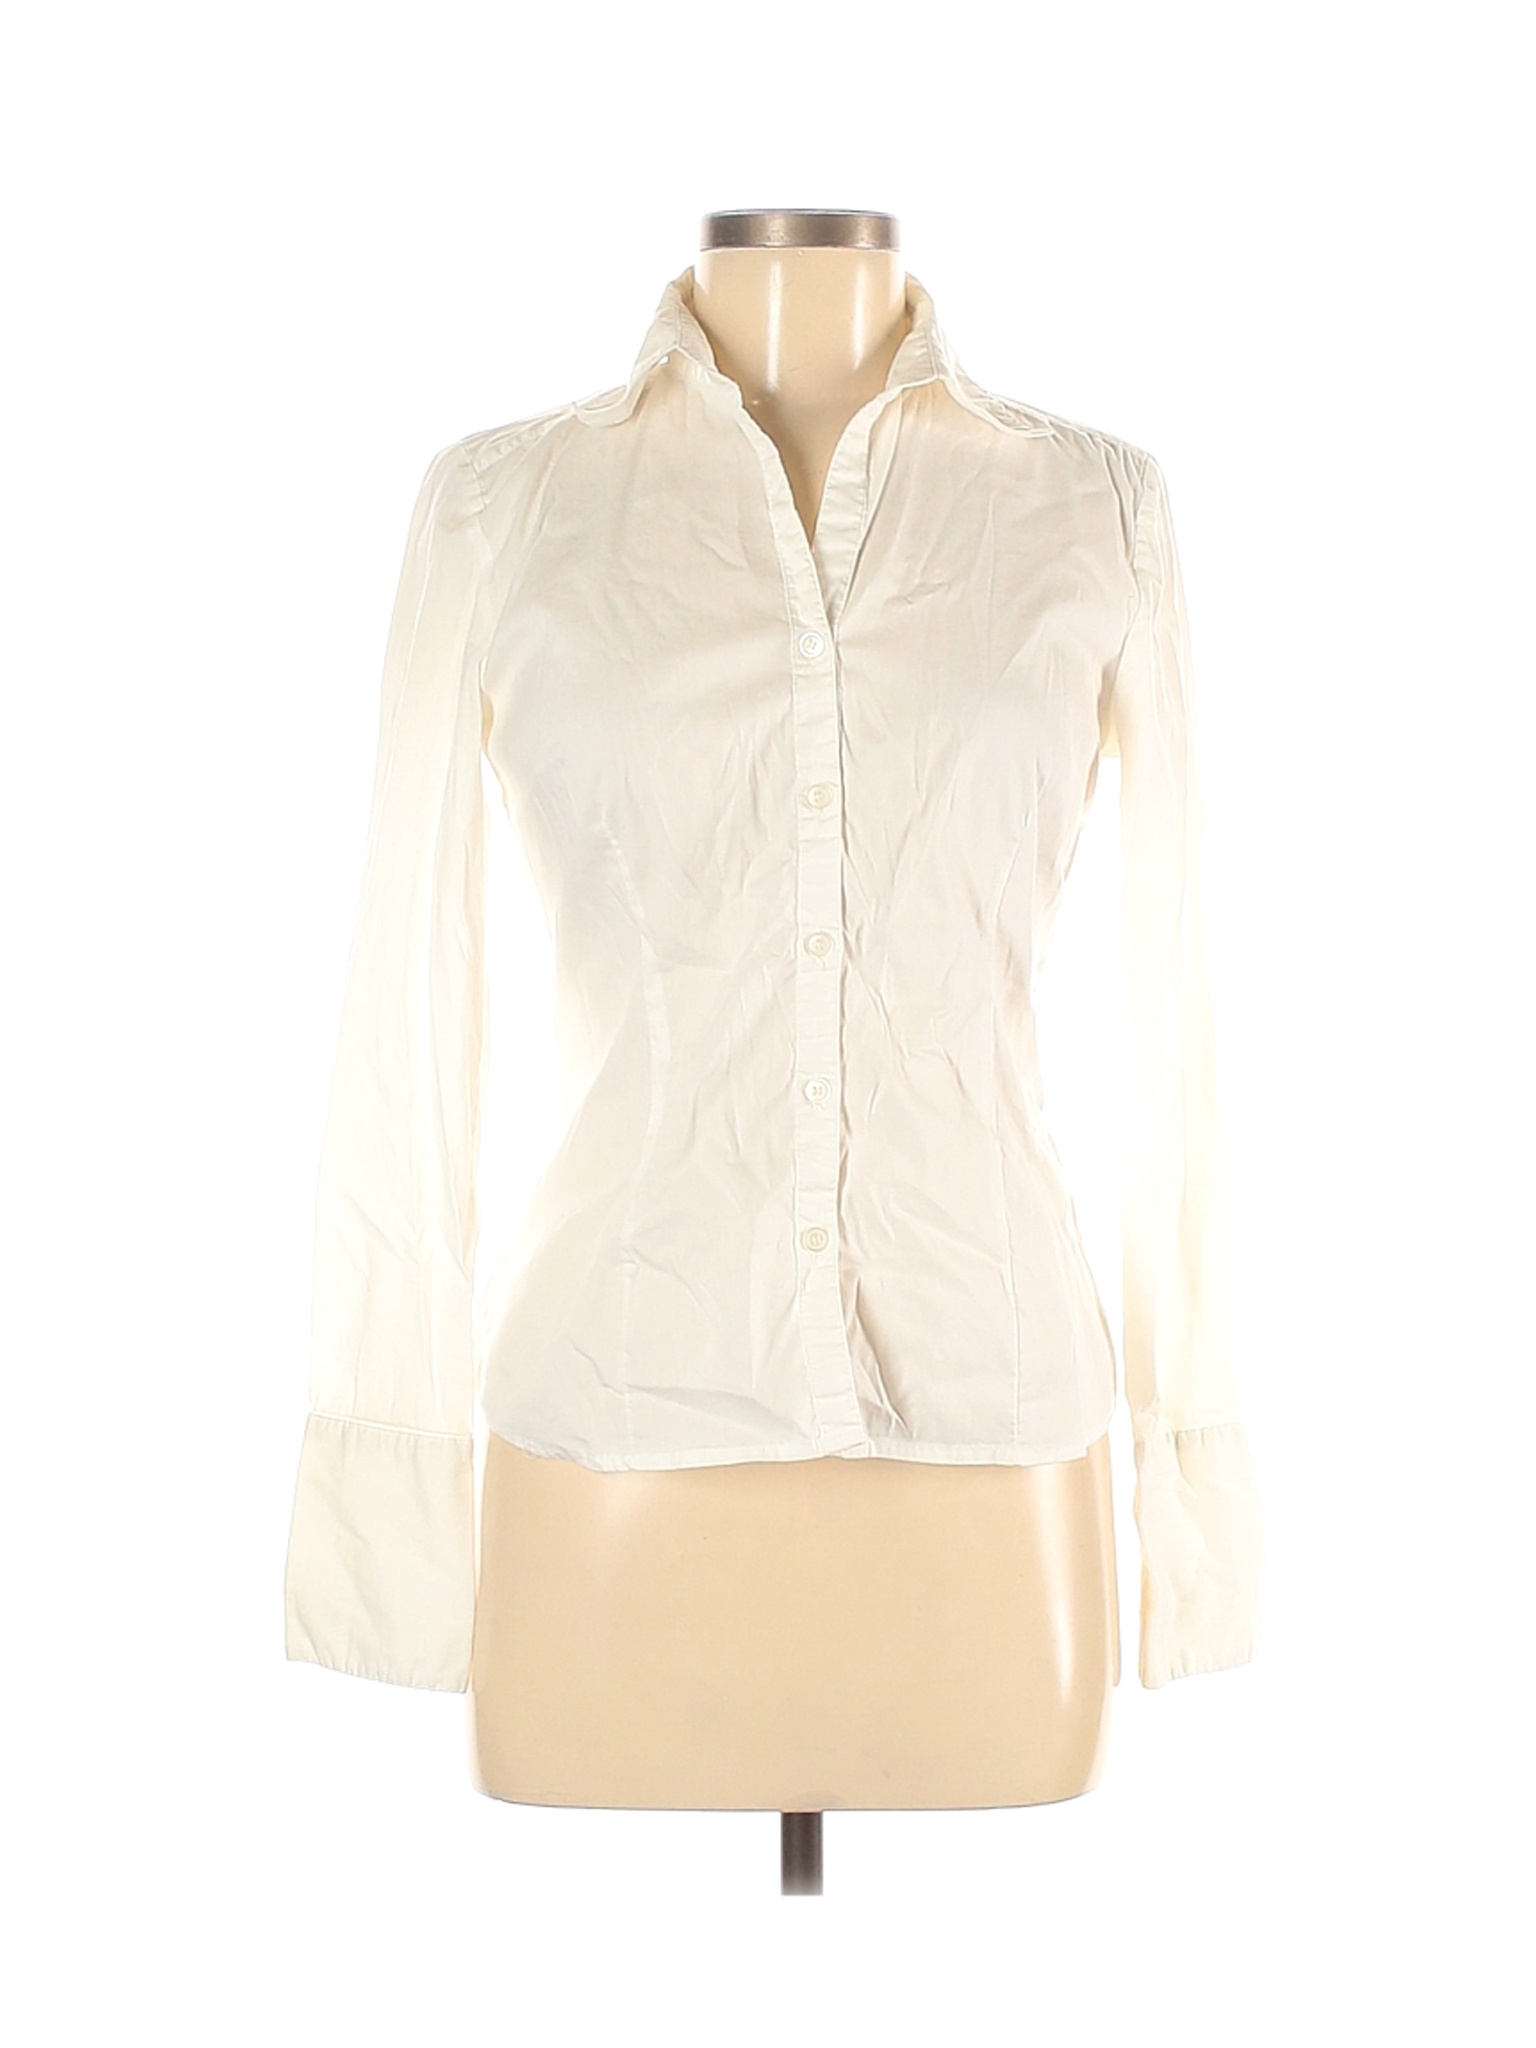 H&M Women Ivory Long Sleeve Button-Down Shirt 6 | eBay